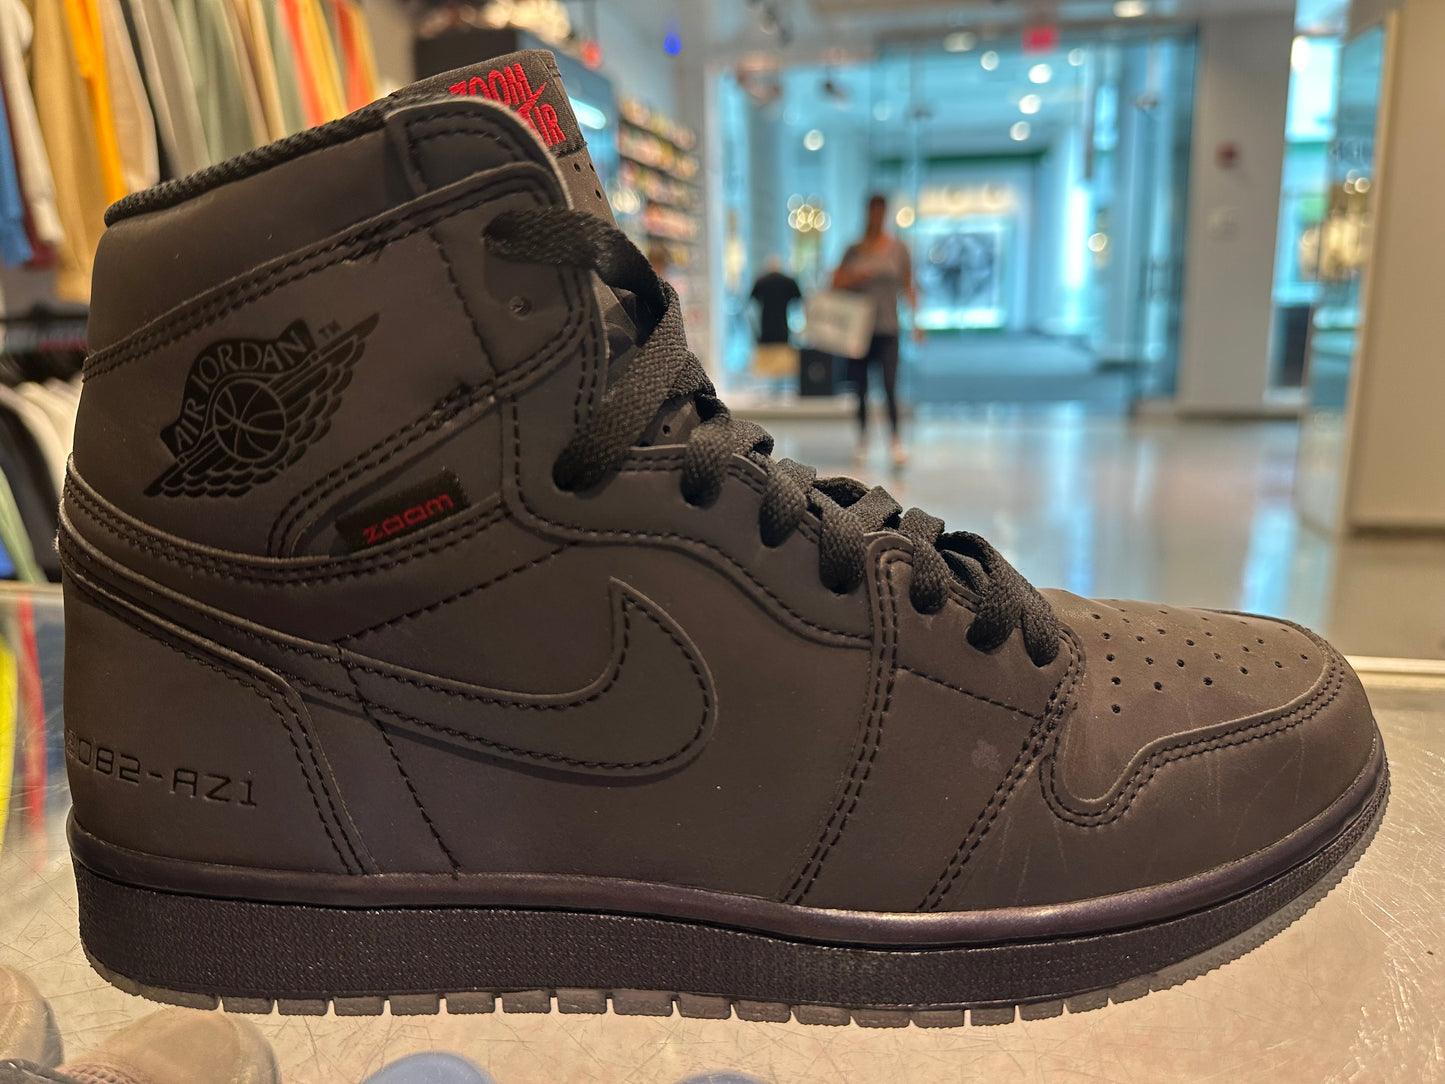 Size 9 Air Jordan 1 “Zoom Fearless” (Mall)